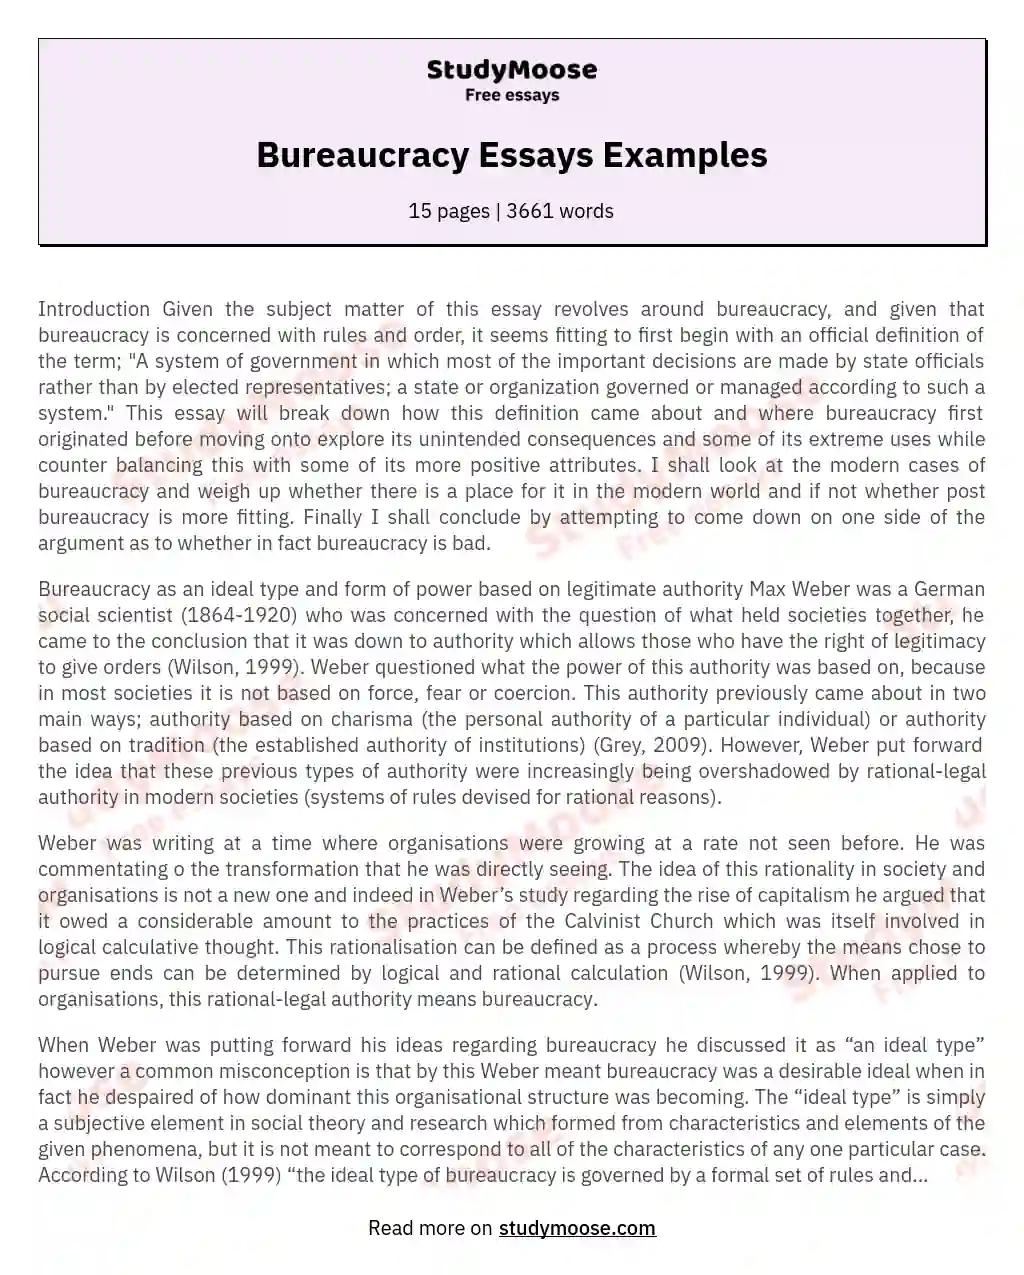 Bureaucracy Essays Examples essay